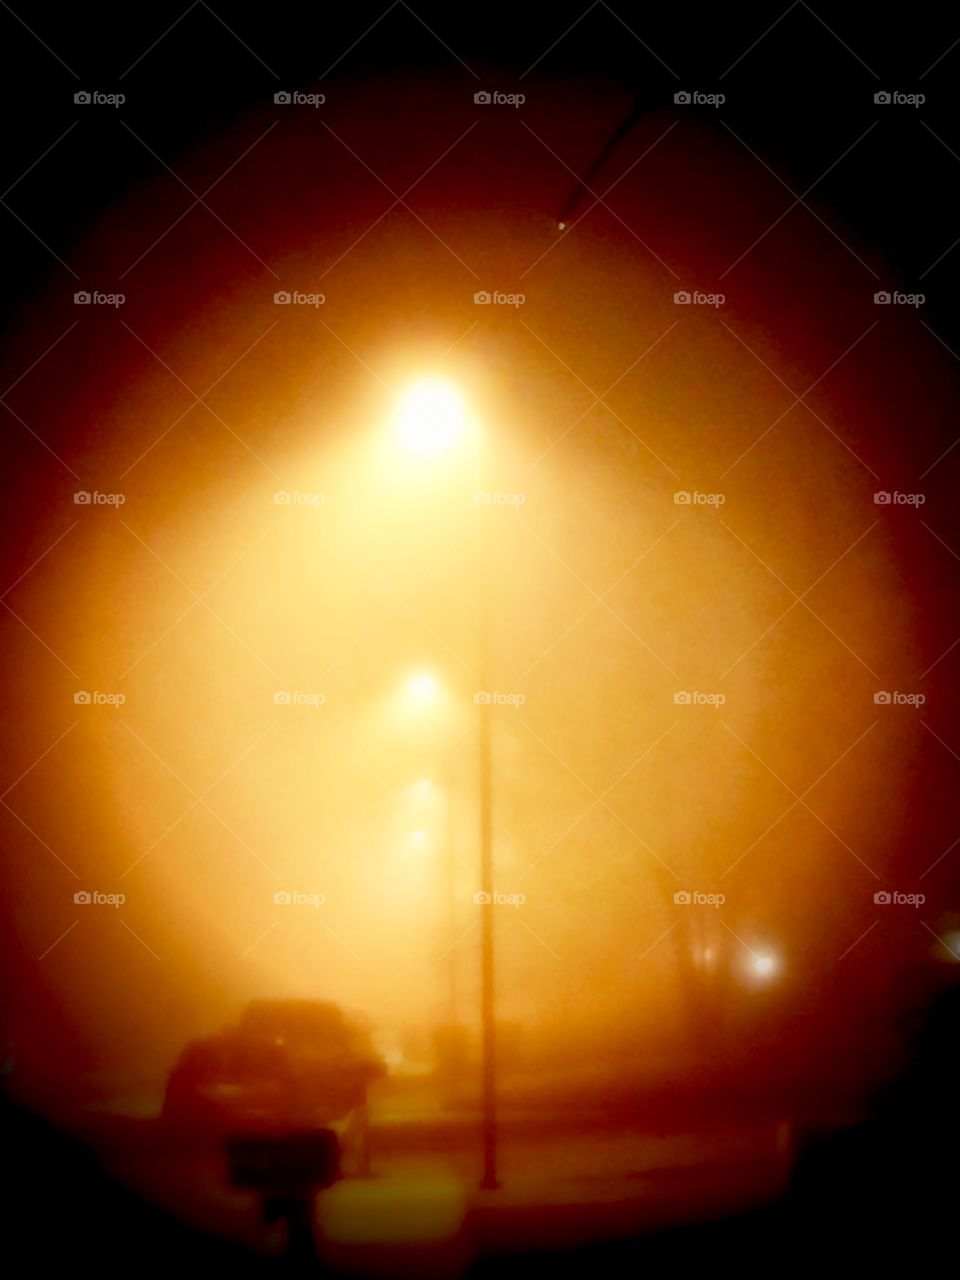 Orange Story
Heavy Fog  rolls in, encompassing streetlights, parked cars, and residential neighborhood.